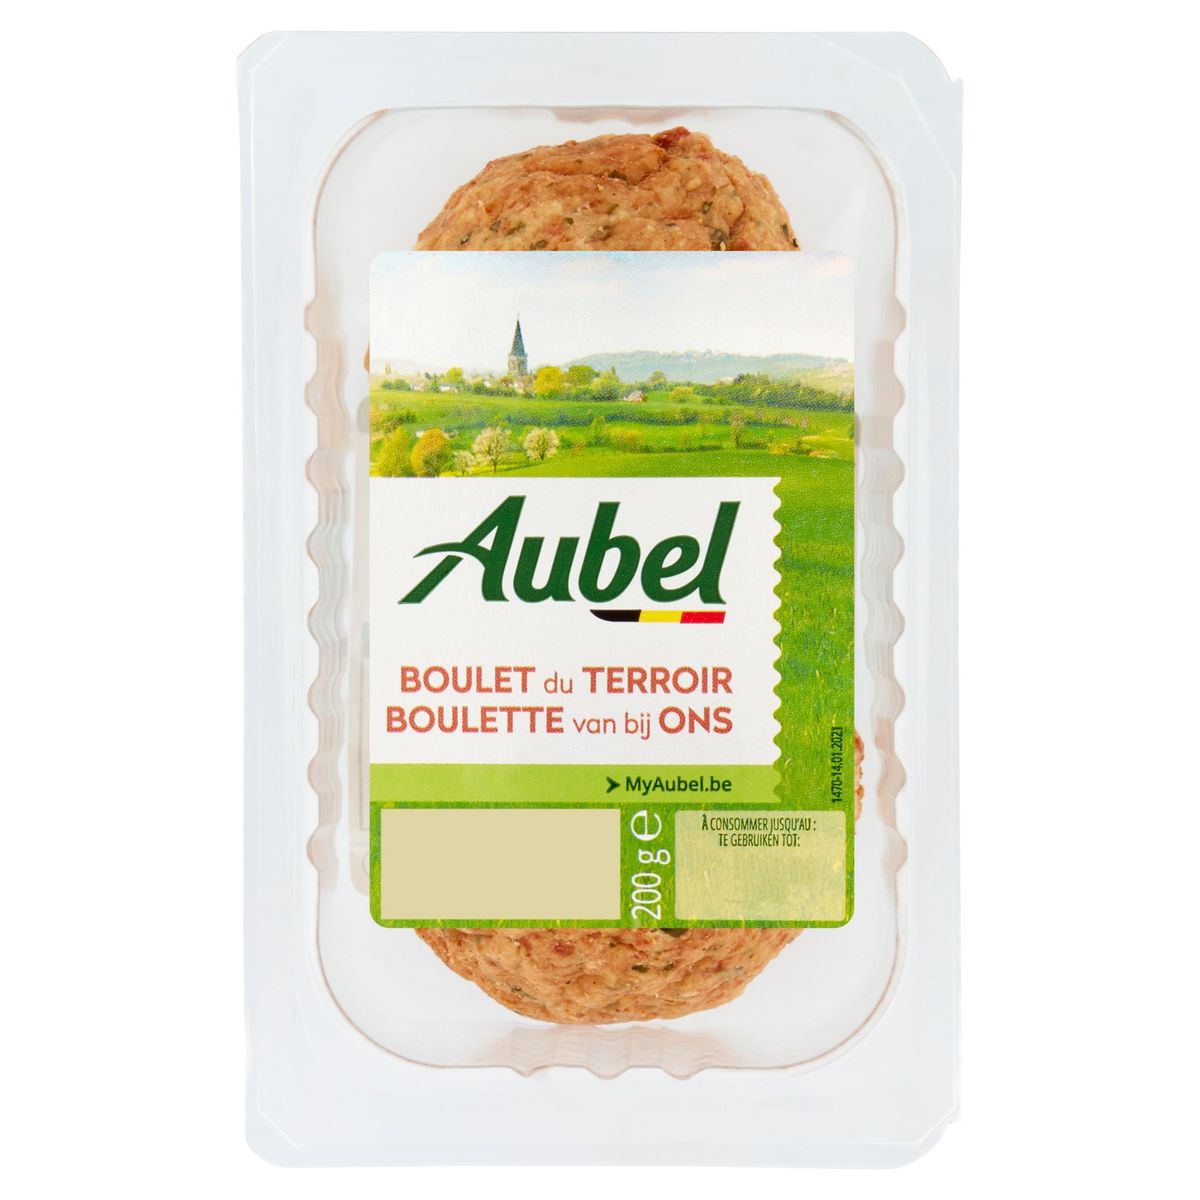 Aubel Boulet du Terroir 200 g